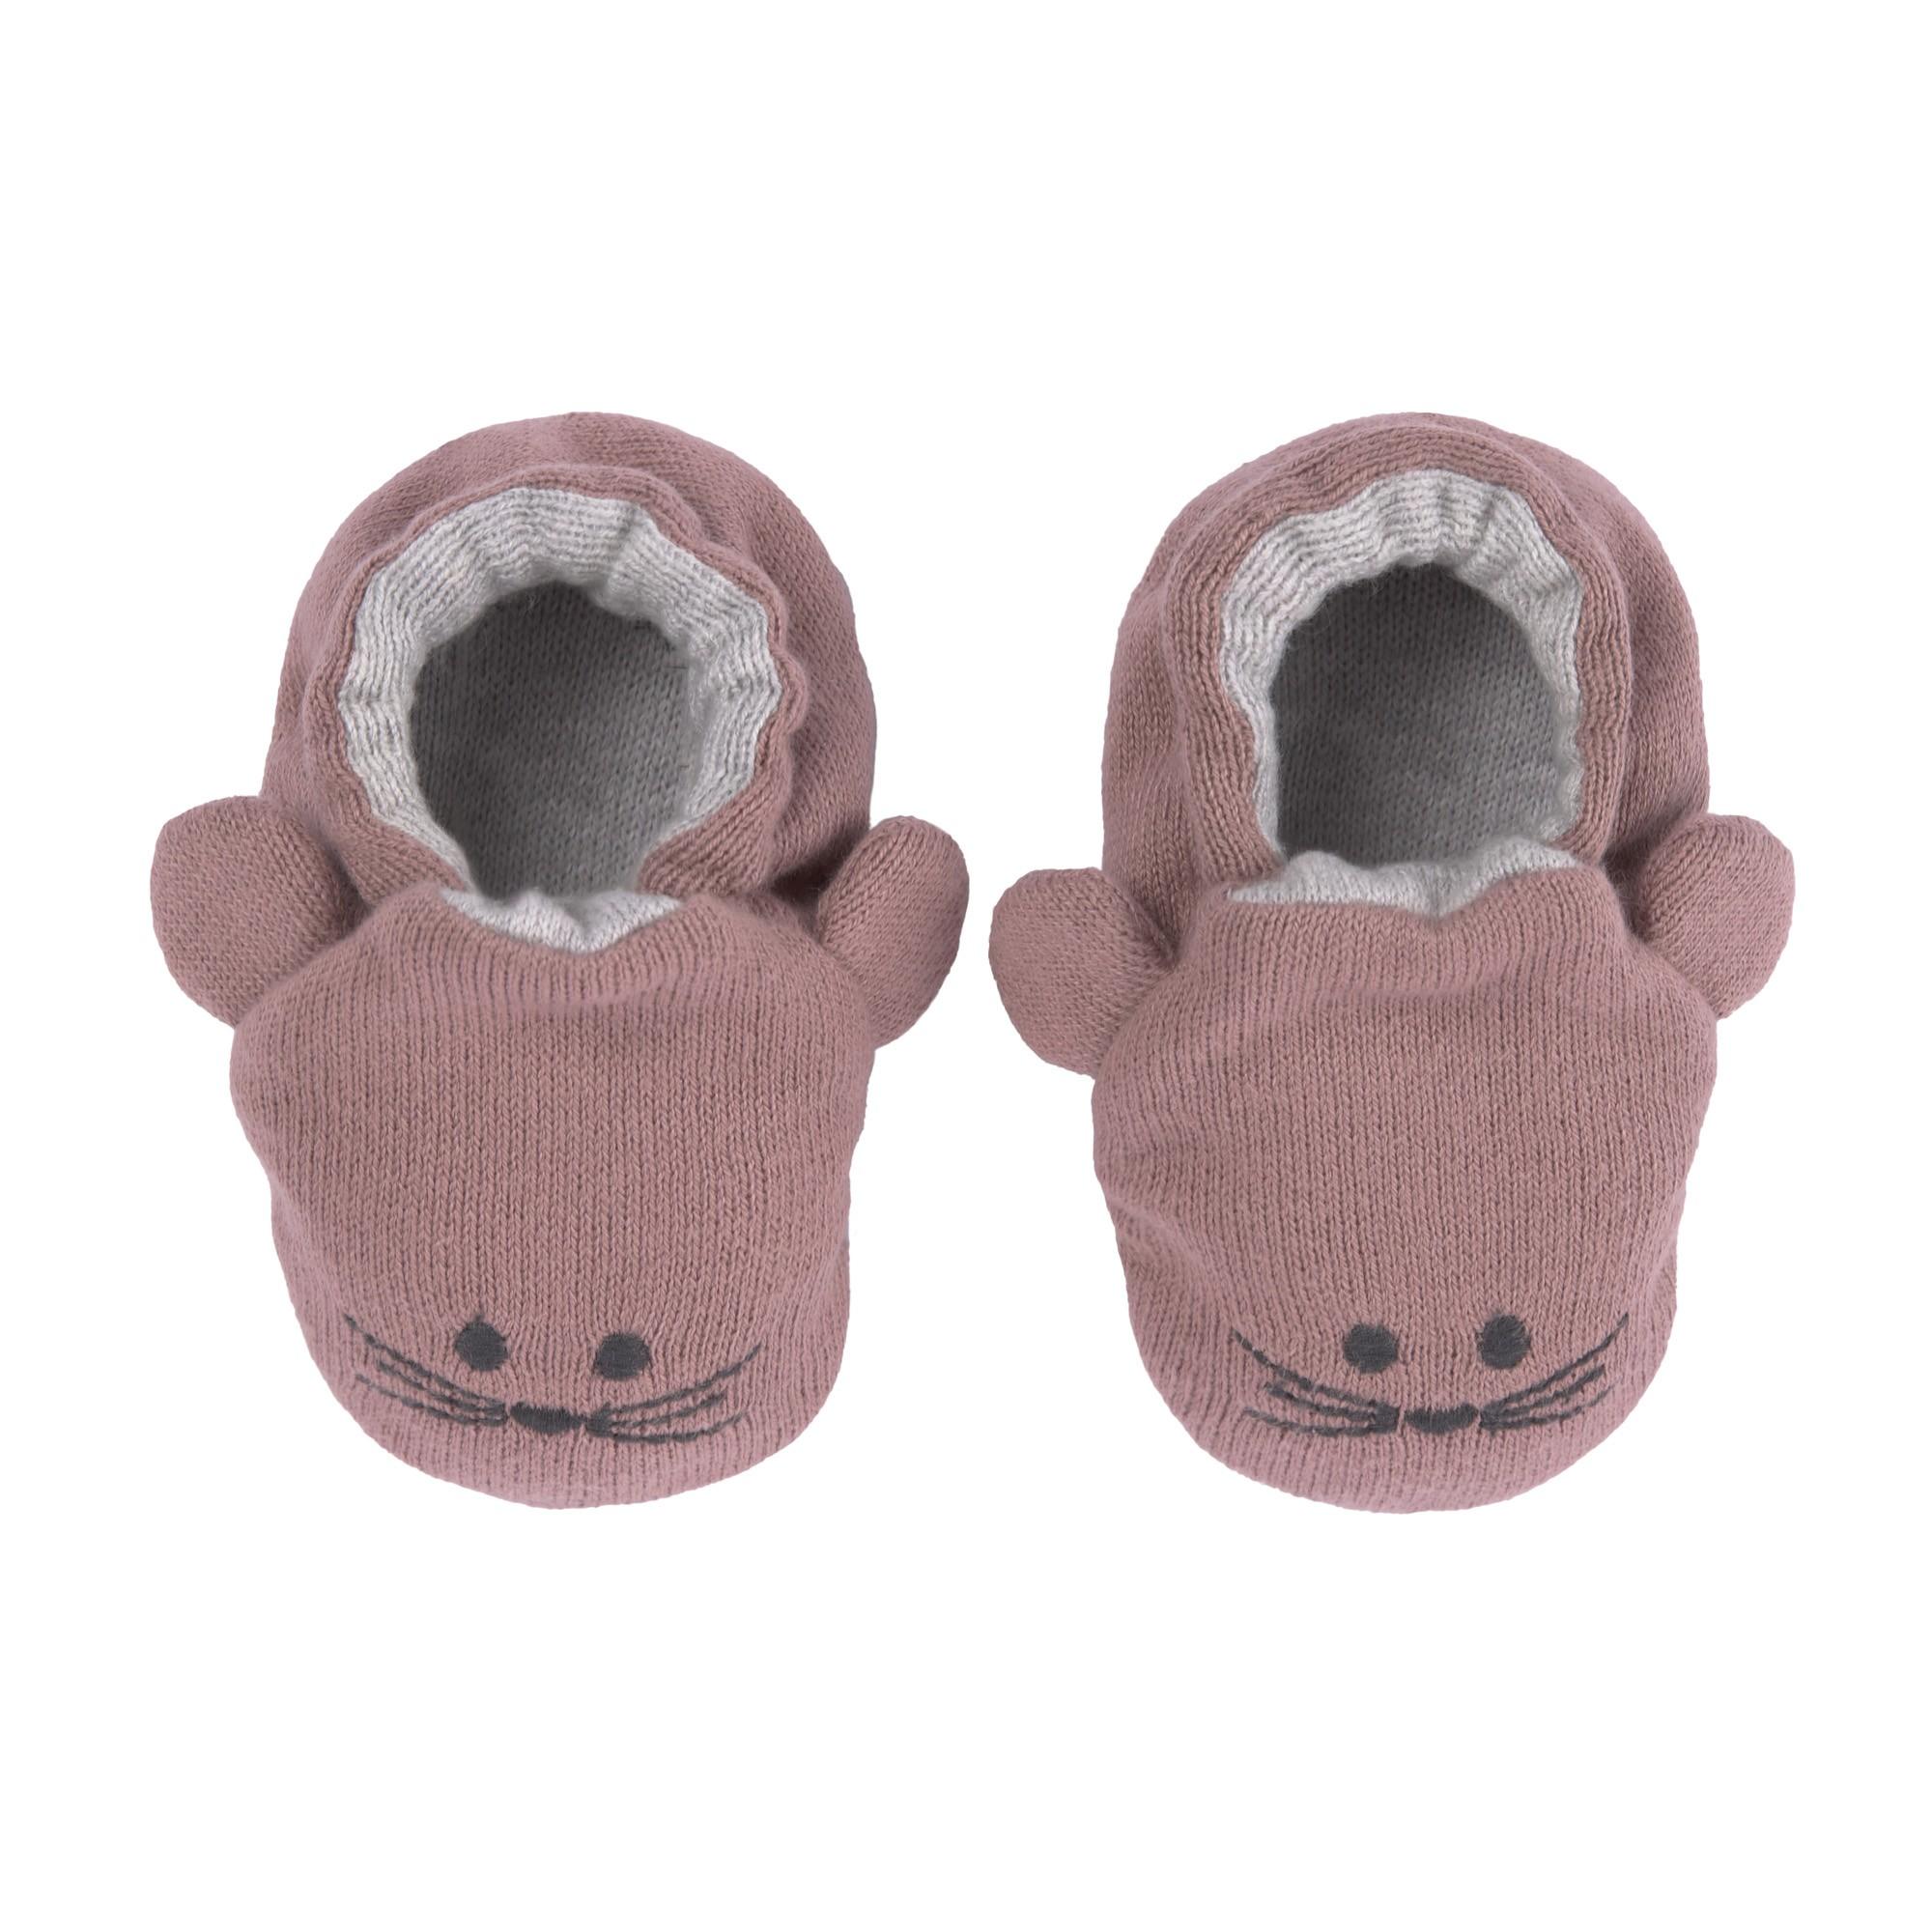 Lassig - Baby shoes gots little chums mouse